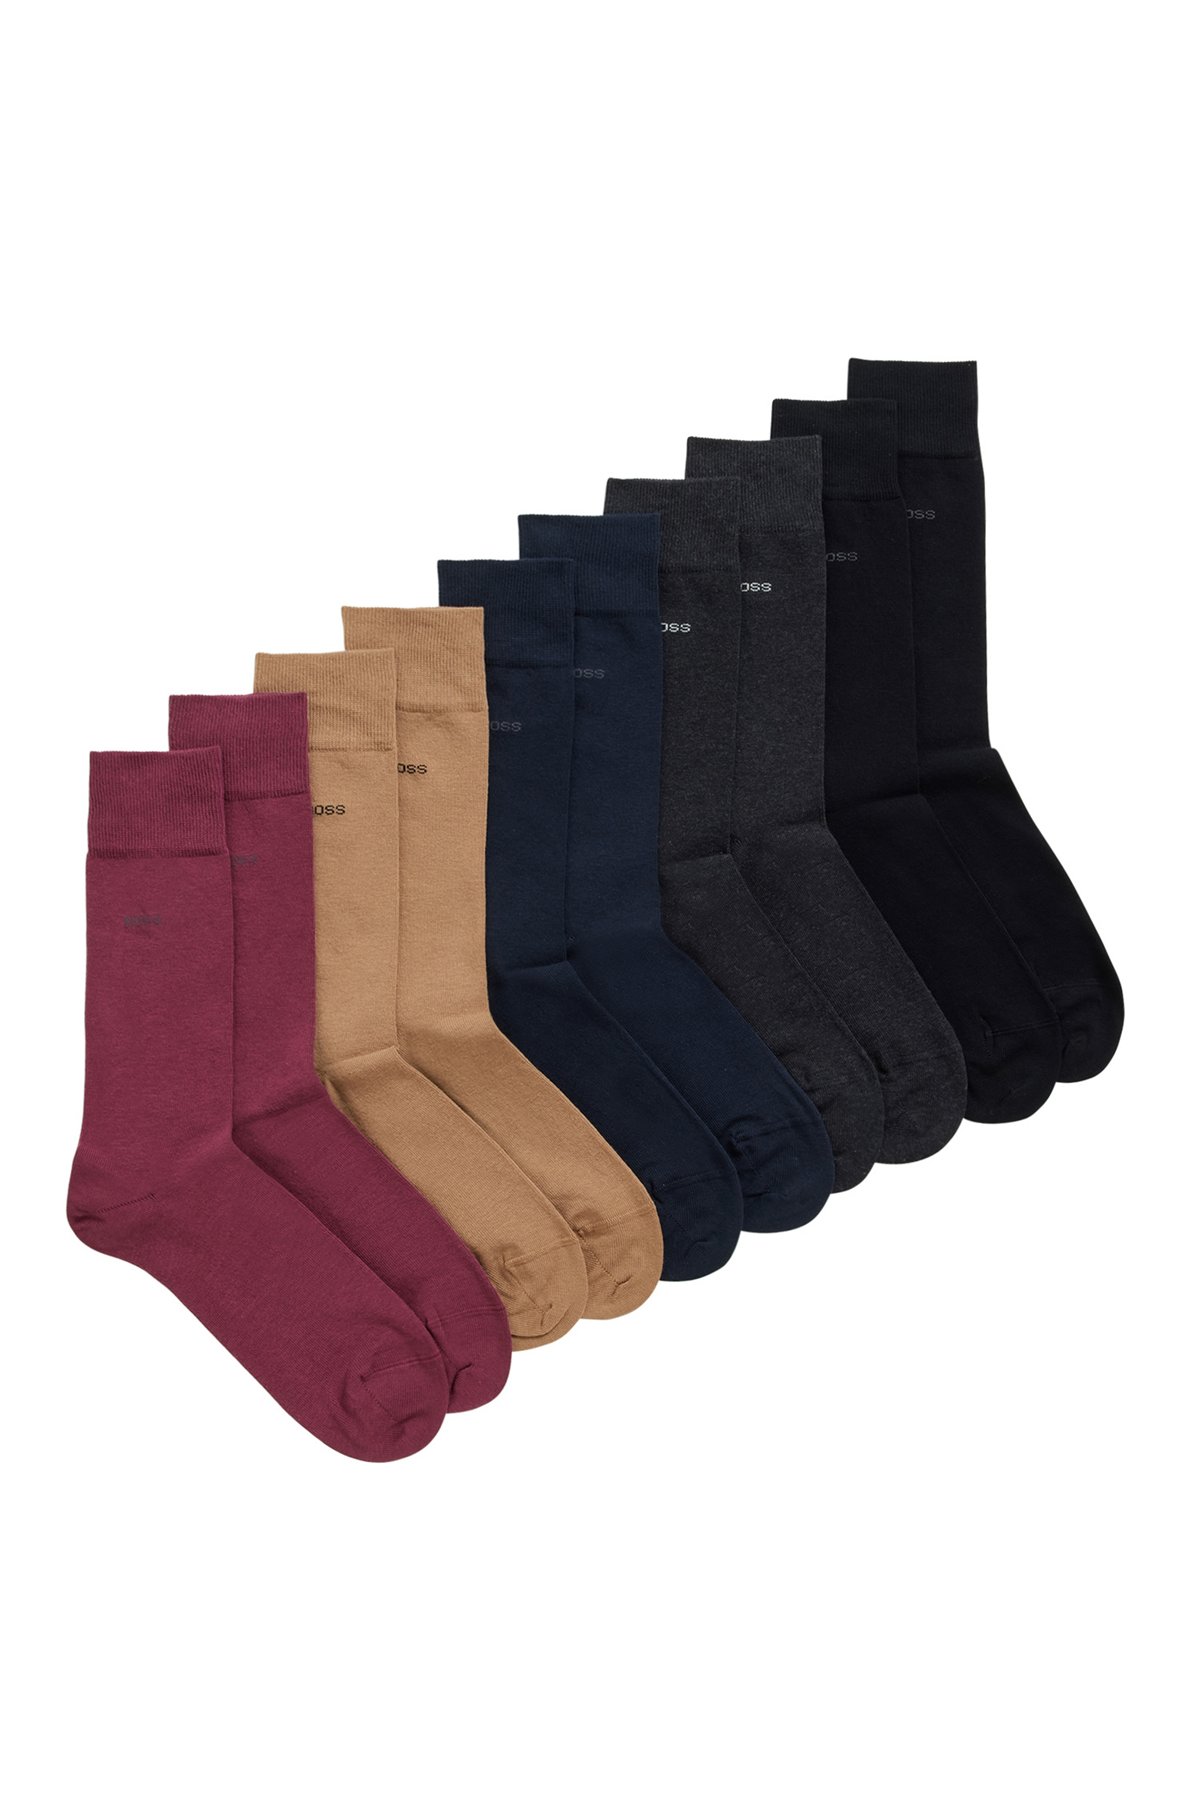 Five-pack of regular-length socks in a cotton blend, Patterned